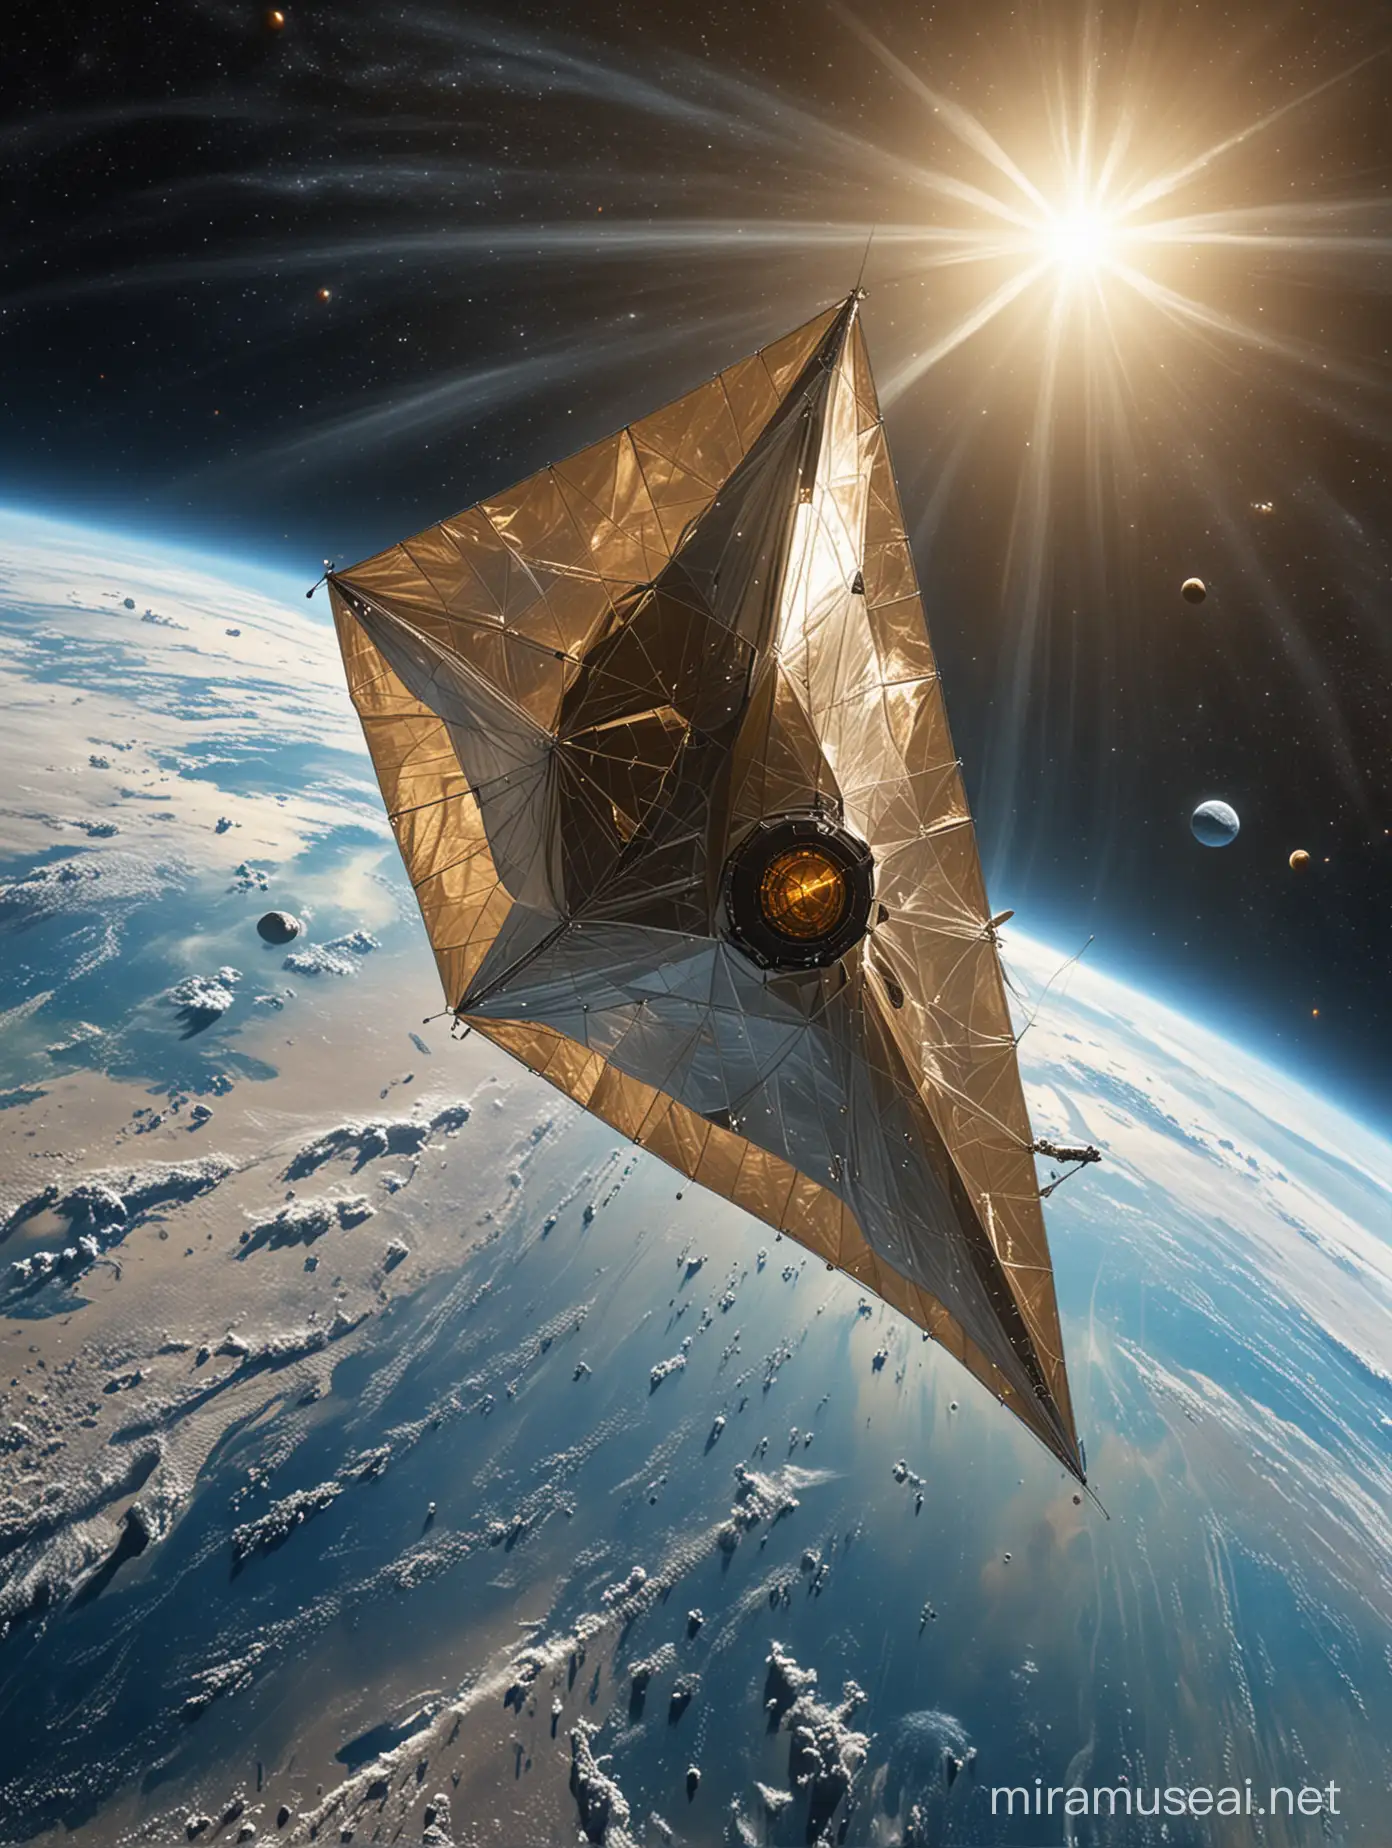 Sunjammer Solar Sail Spacecraft Orbiting Earth